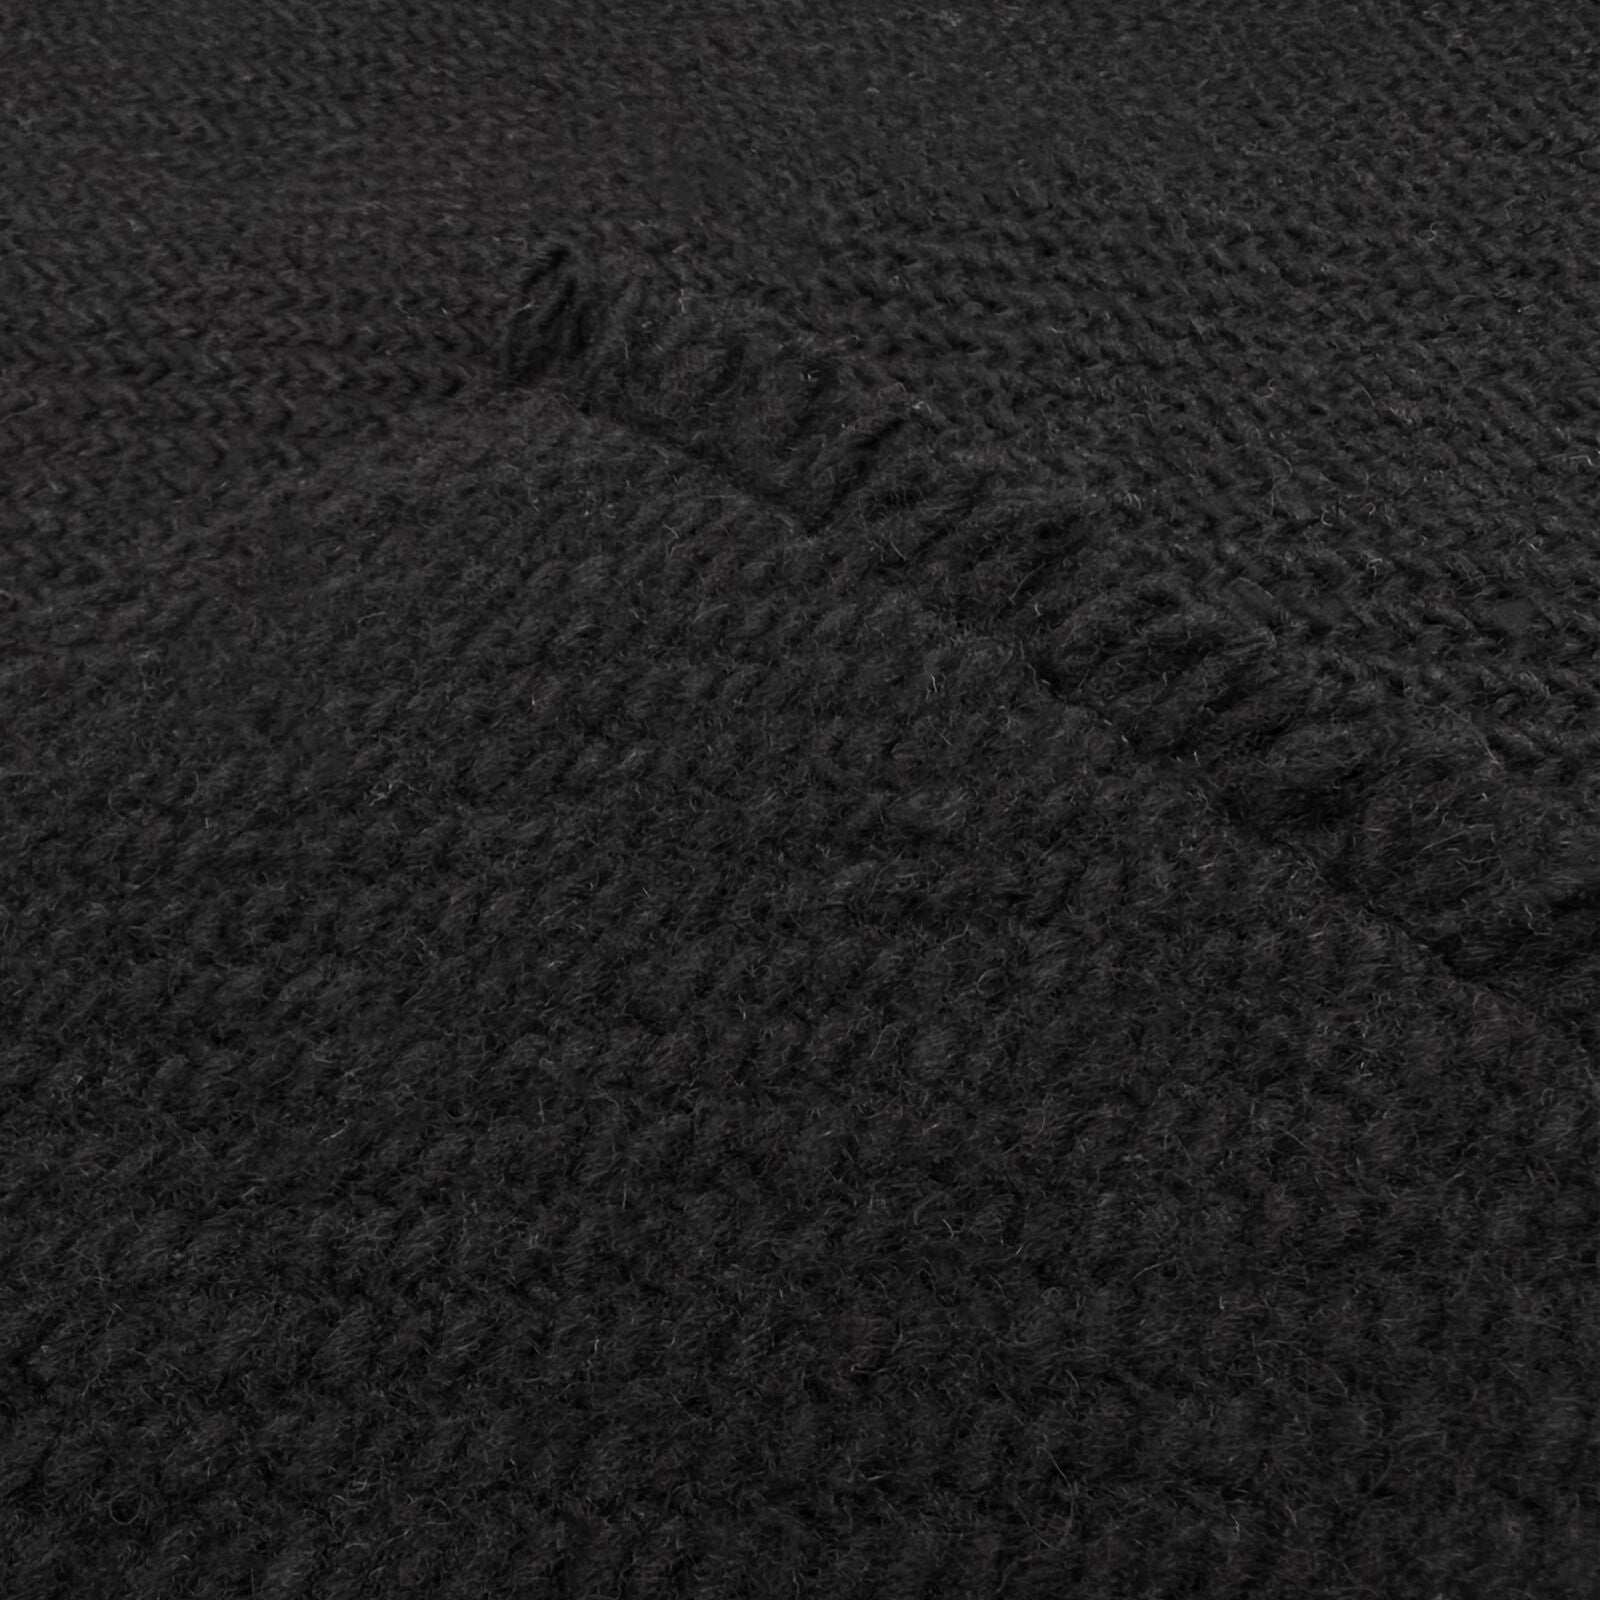 Llama Wool Unisex South American Handwoven Poncho M-XXL - solid black pattern